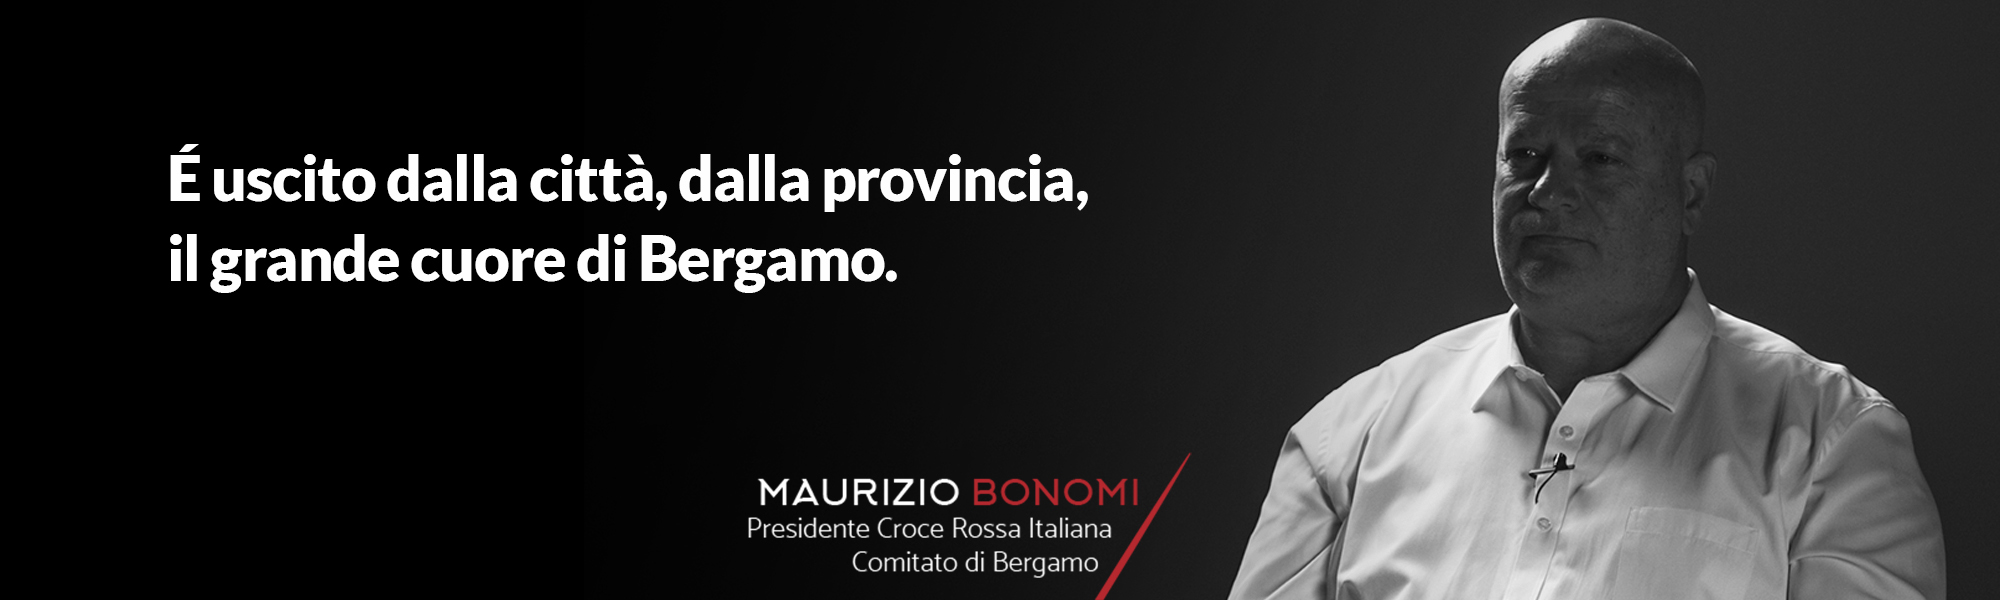 Maurizio Bonomi